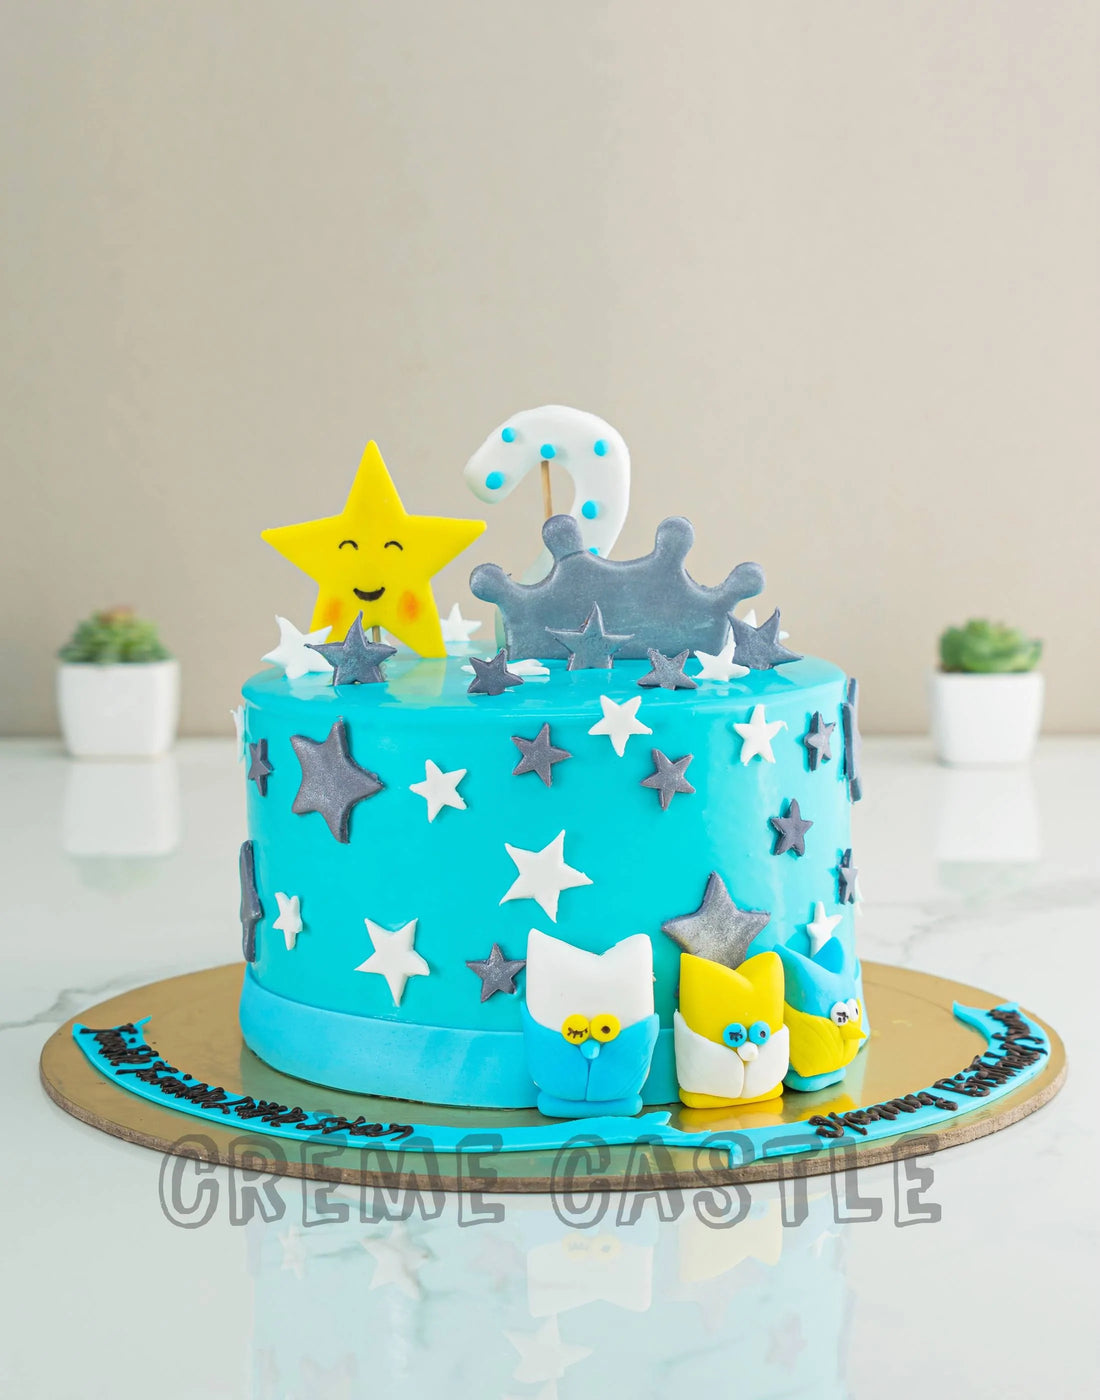 Star Night Theme Cake - Birthday Cake Designs for Boys - Customized Cake In Gurgaon